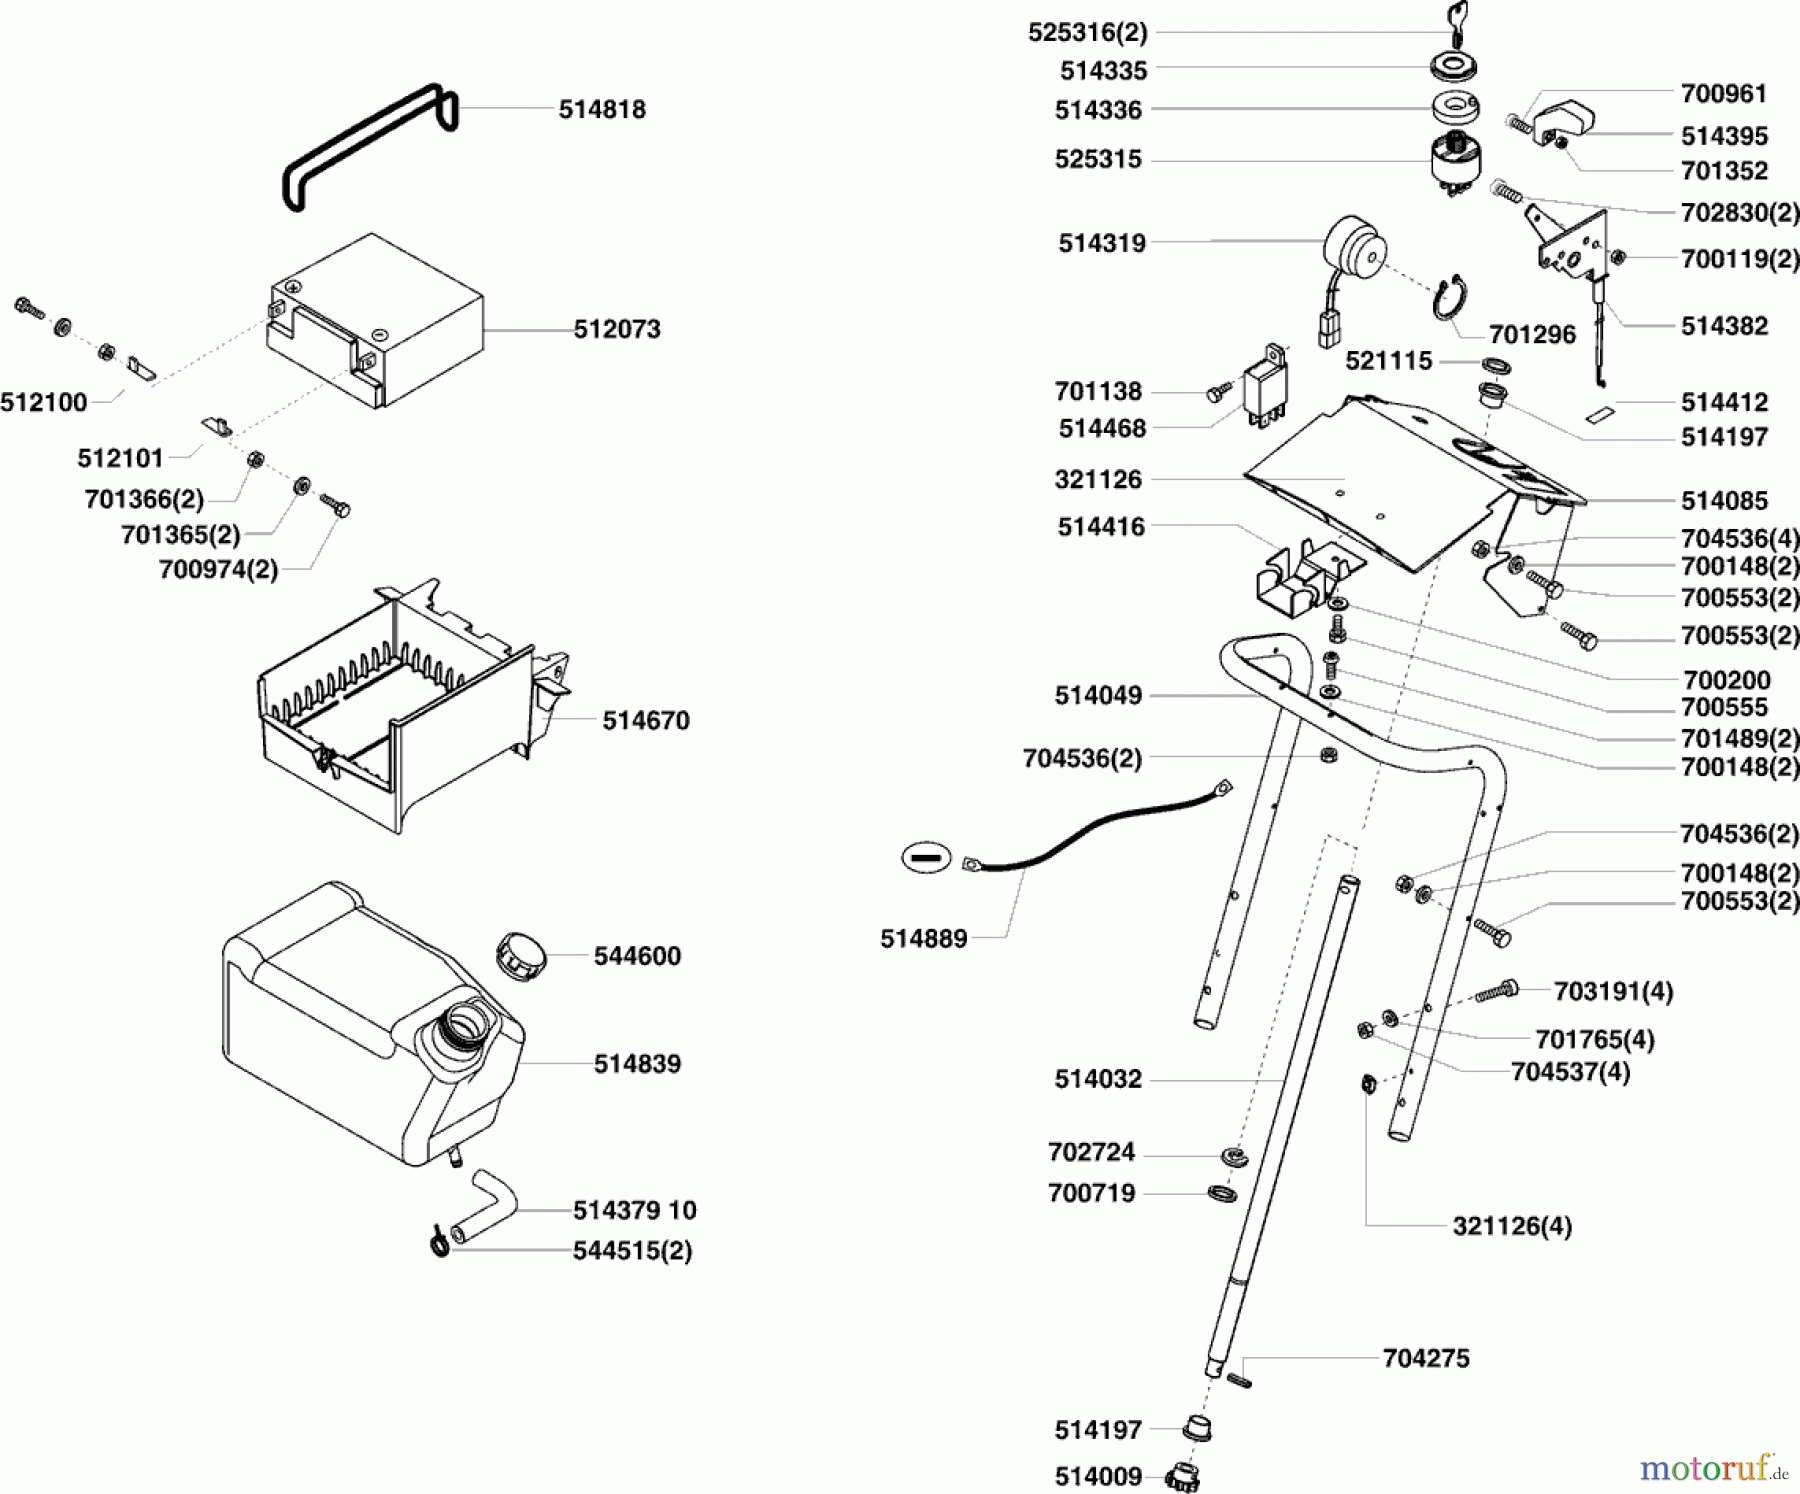  AL-KO Gartentechnik Rasentraktor Comfort T 750 ab 11/2003 Seite 6